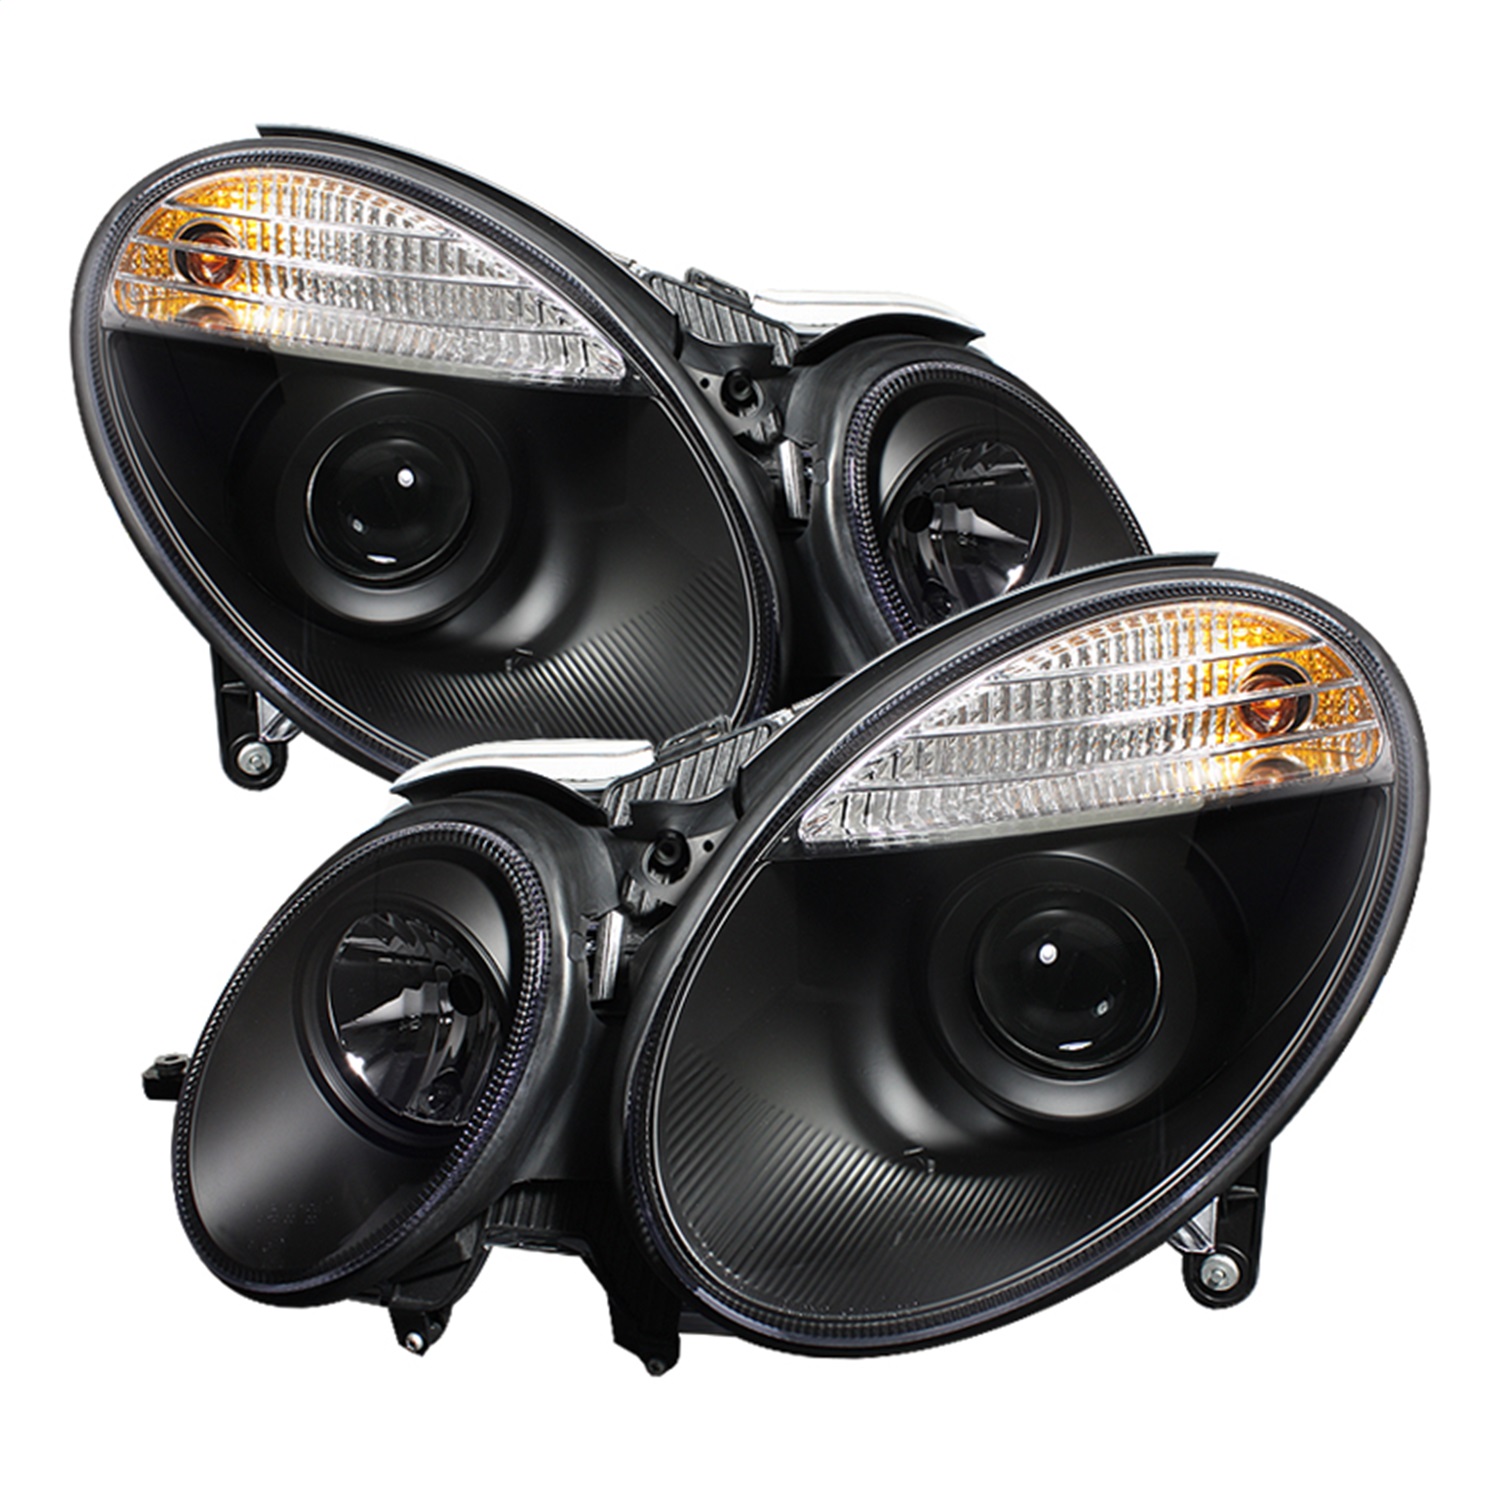 Spyder Auto 5042217 Projector Headlights Fits E280 E300 E320 E350 E550 E63 AMG